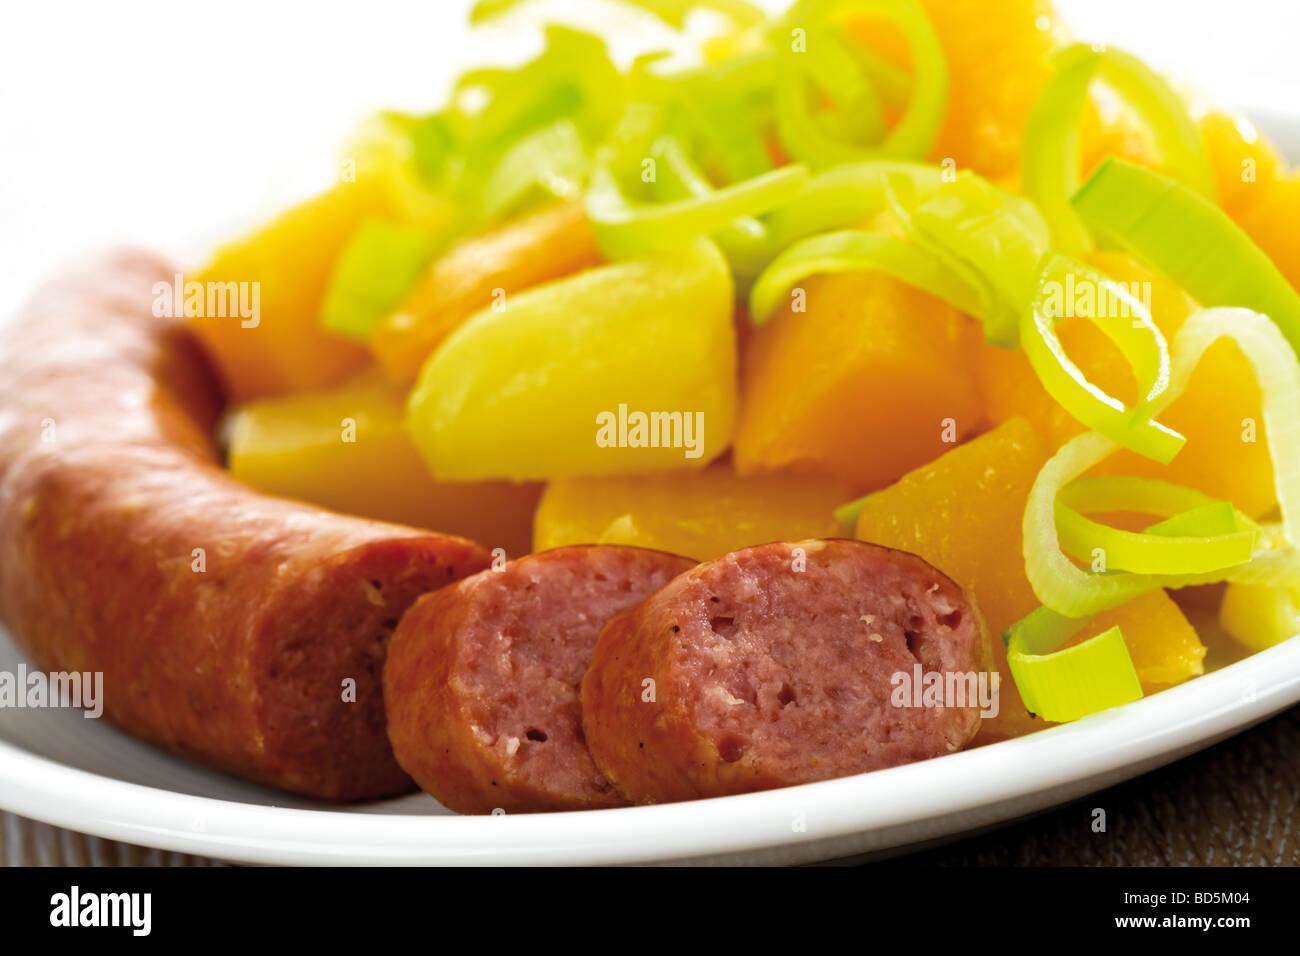 Turnip dish with leeks and Mettwurst sausage Stock Photo